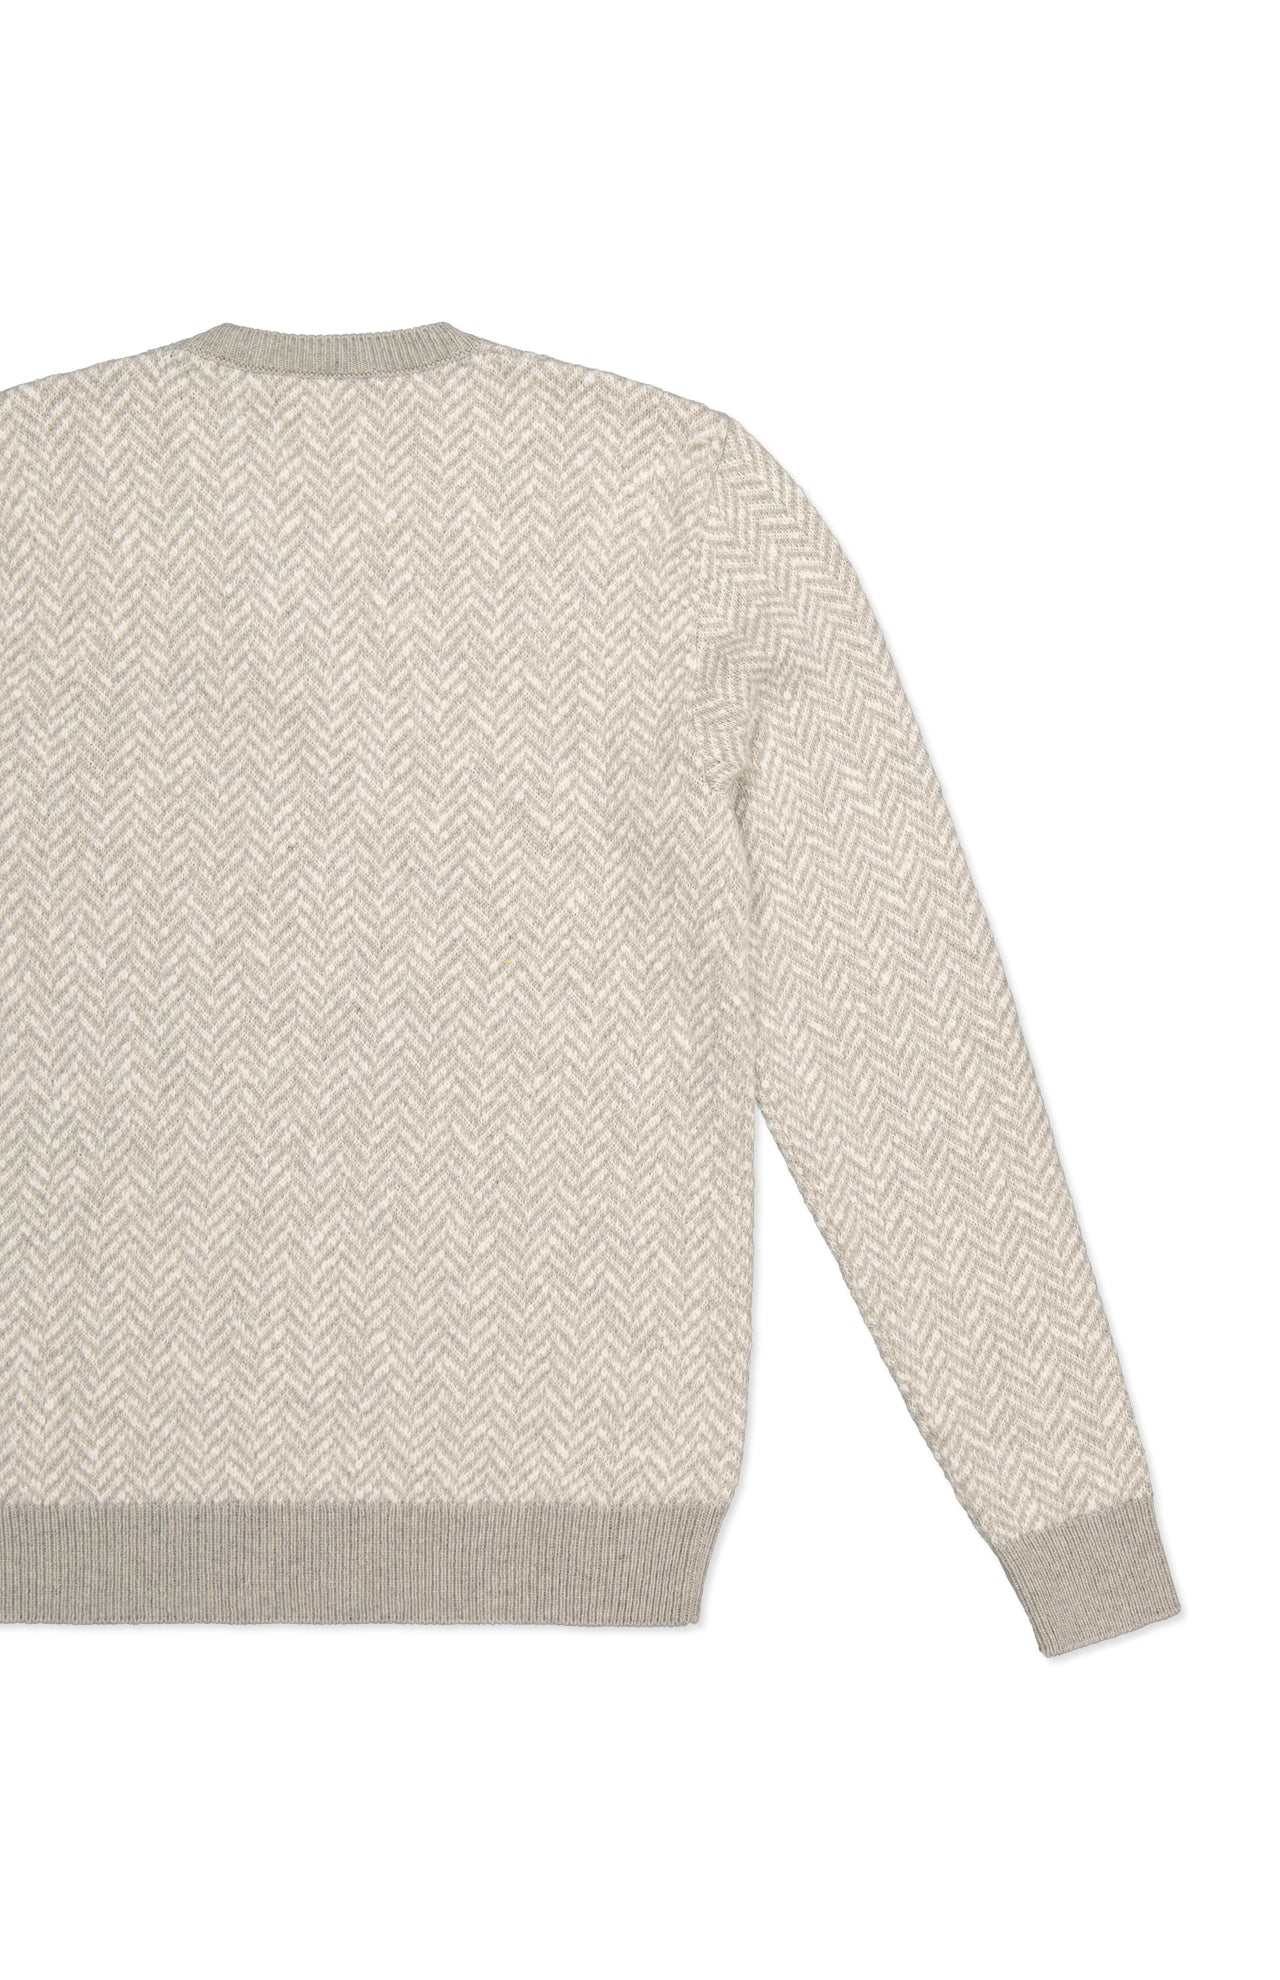 Herringbone Long Sleeve Sweater (7312314368115)